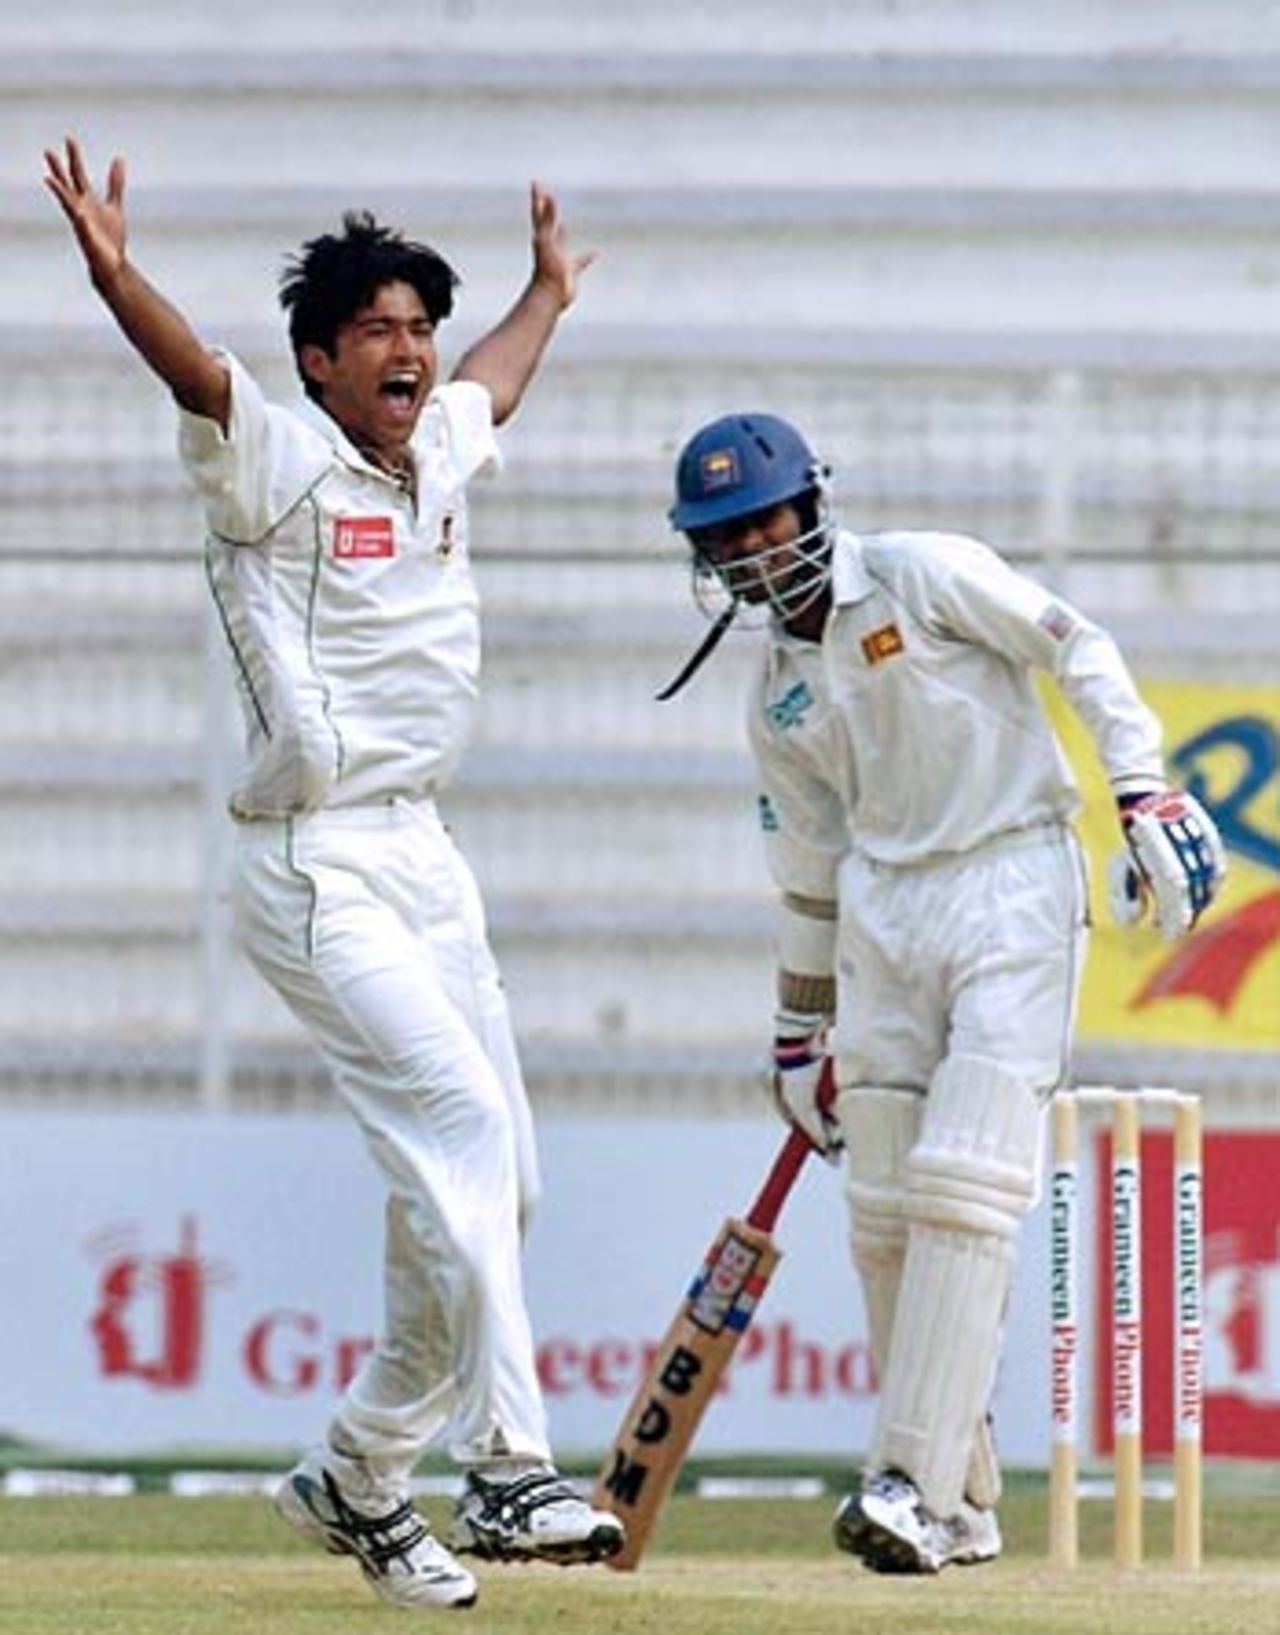 Shahadat Hossain celebrates the dismissal of Upul Tharanga, Bangladesh v Sri Lanka, 2nd Test, Bogra, 3rd day, March 10, 2006